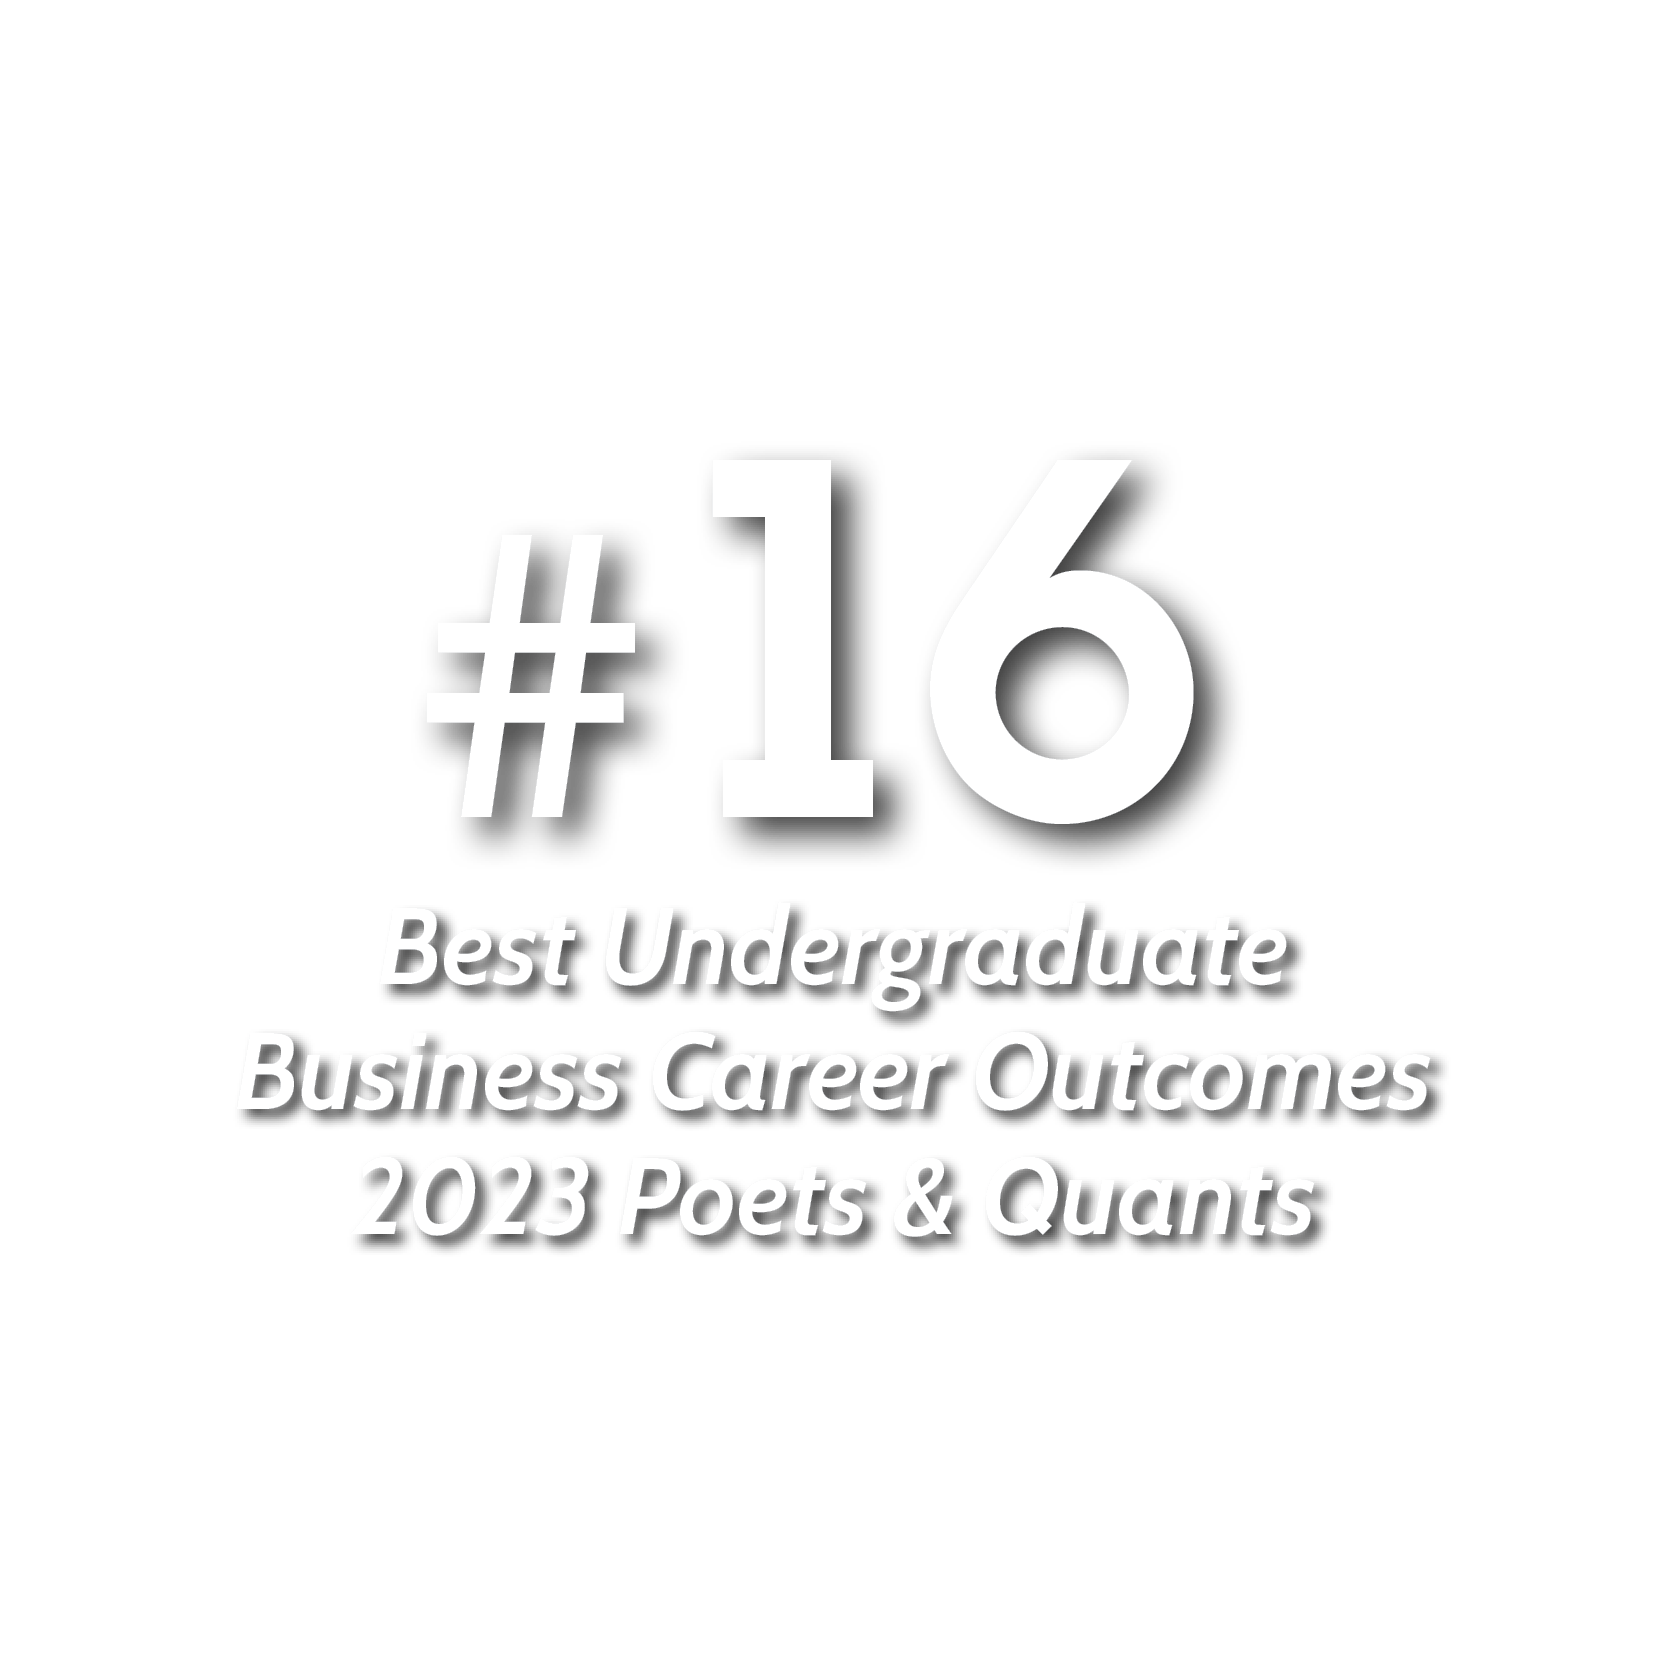 #16 Best Undergraduate Business Career Outcomes 2023 Poets & Quants